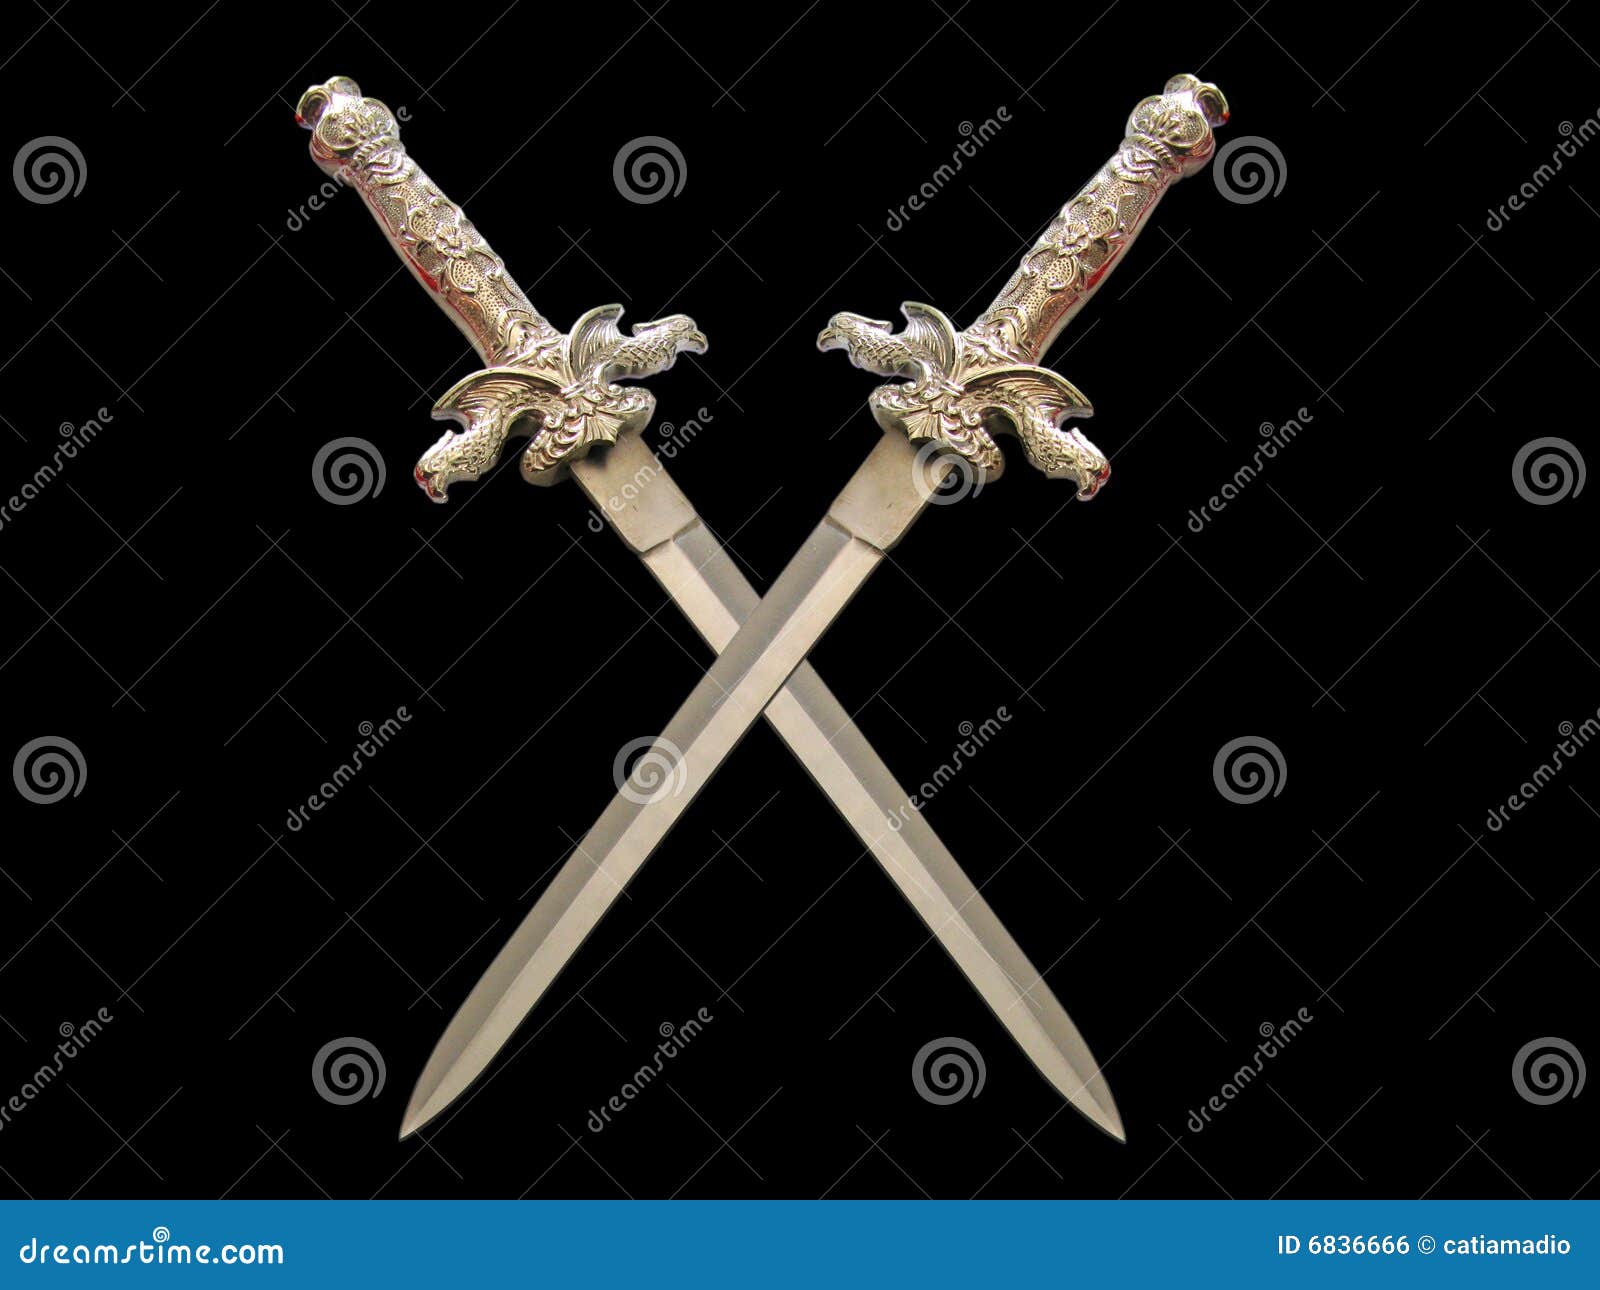 crossed swords in the dark